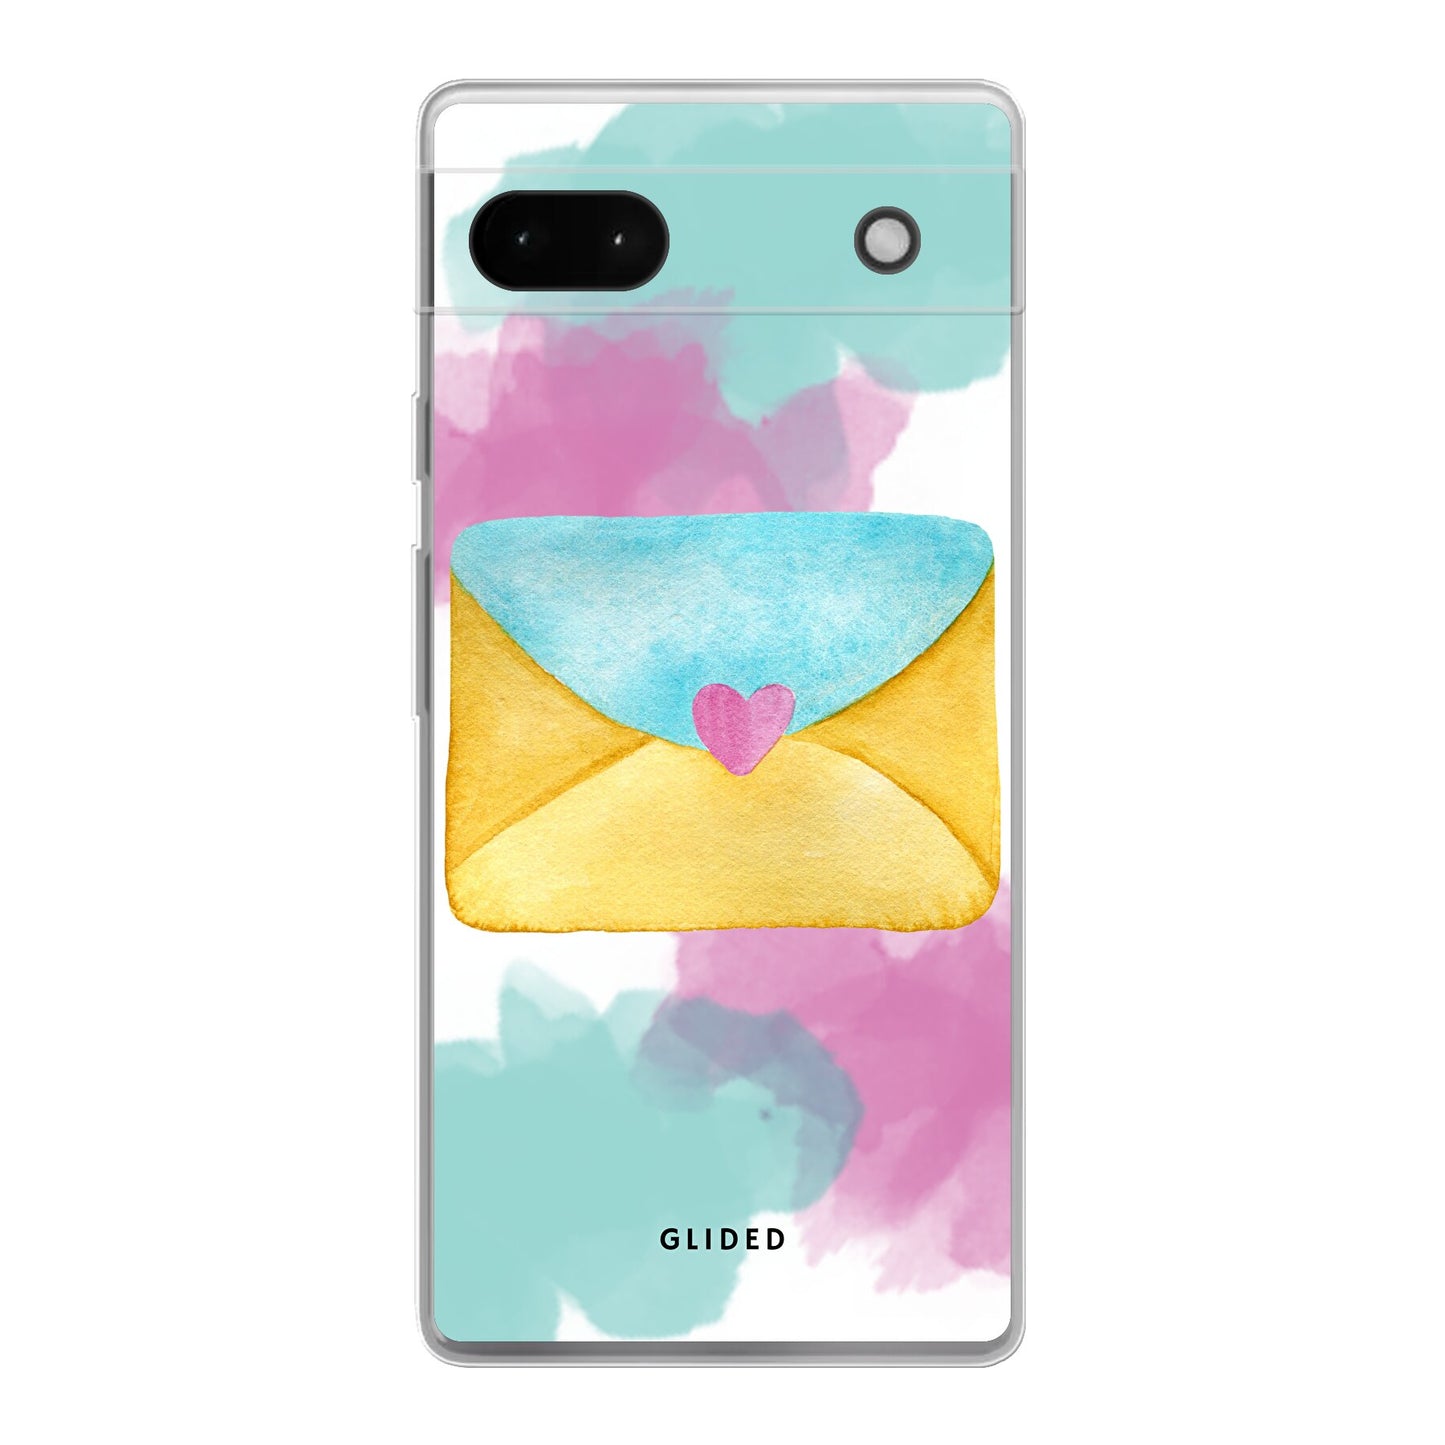 Envelope - Google Pixel 6a - Soft case